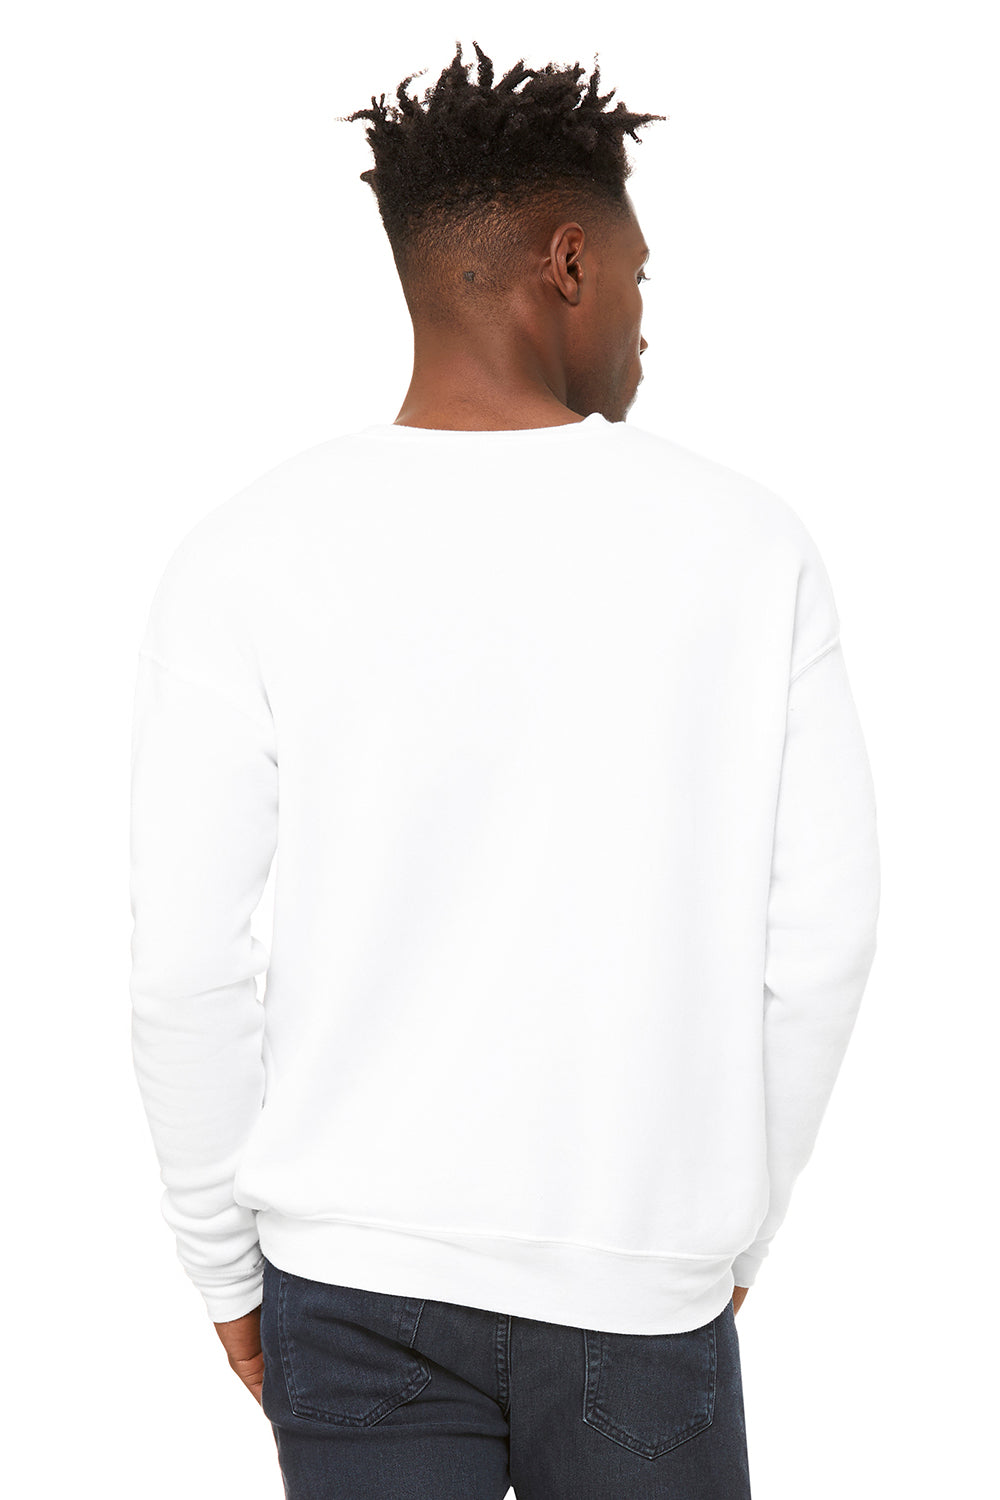 Bella + Canvas BC3945/3945 Mens Fleece Crewneck Sweatshirt DTG White Model Back